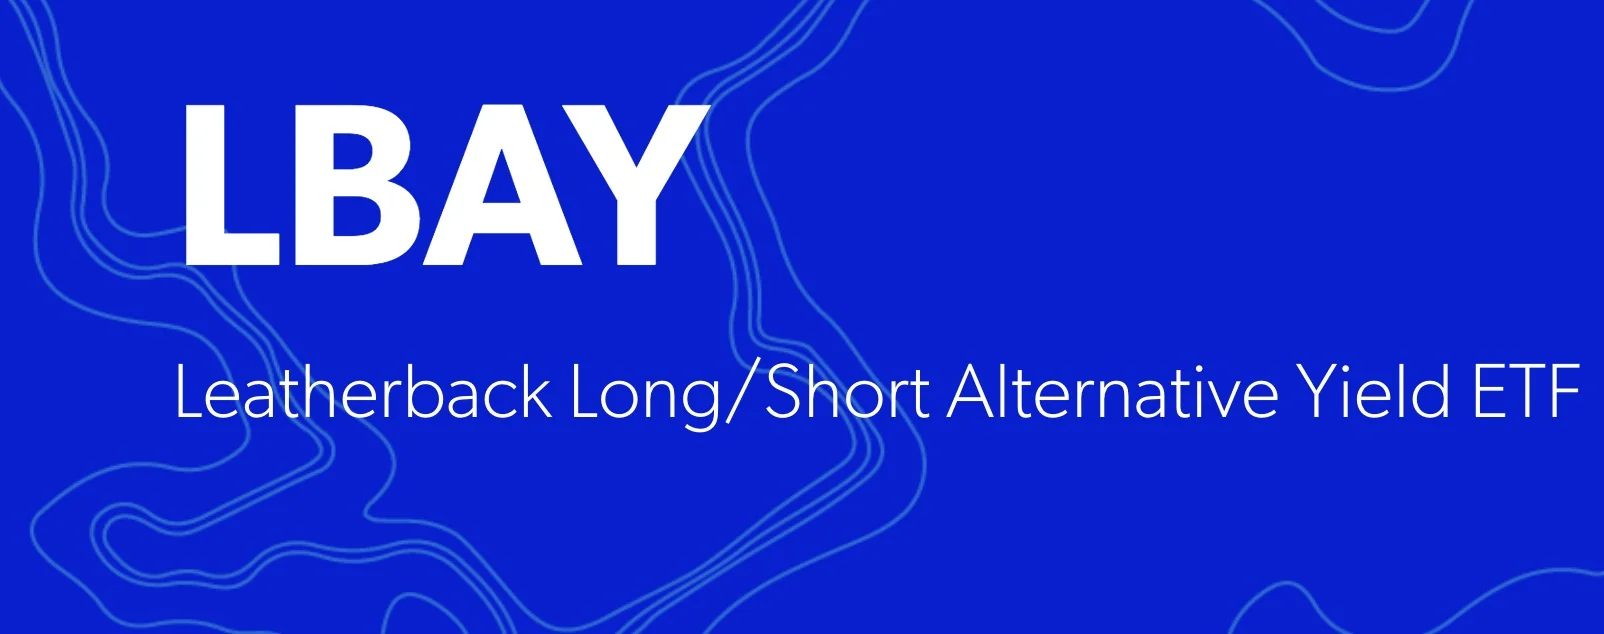 LBAY Leatherback Long/Short Alternative Yield ETF Logo 